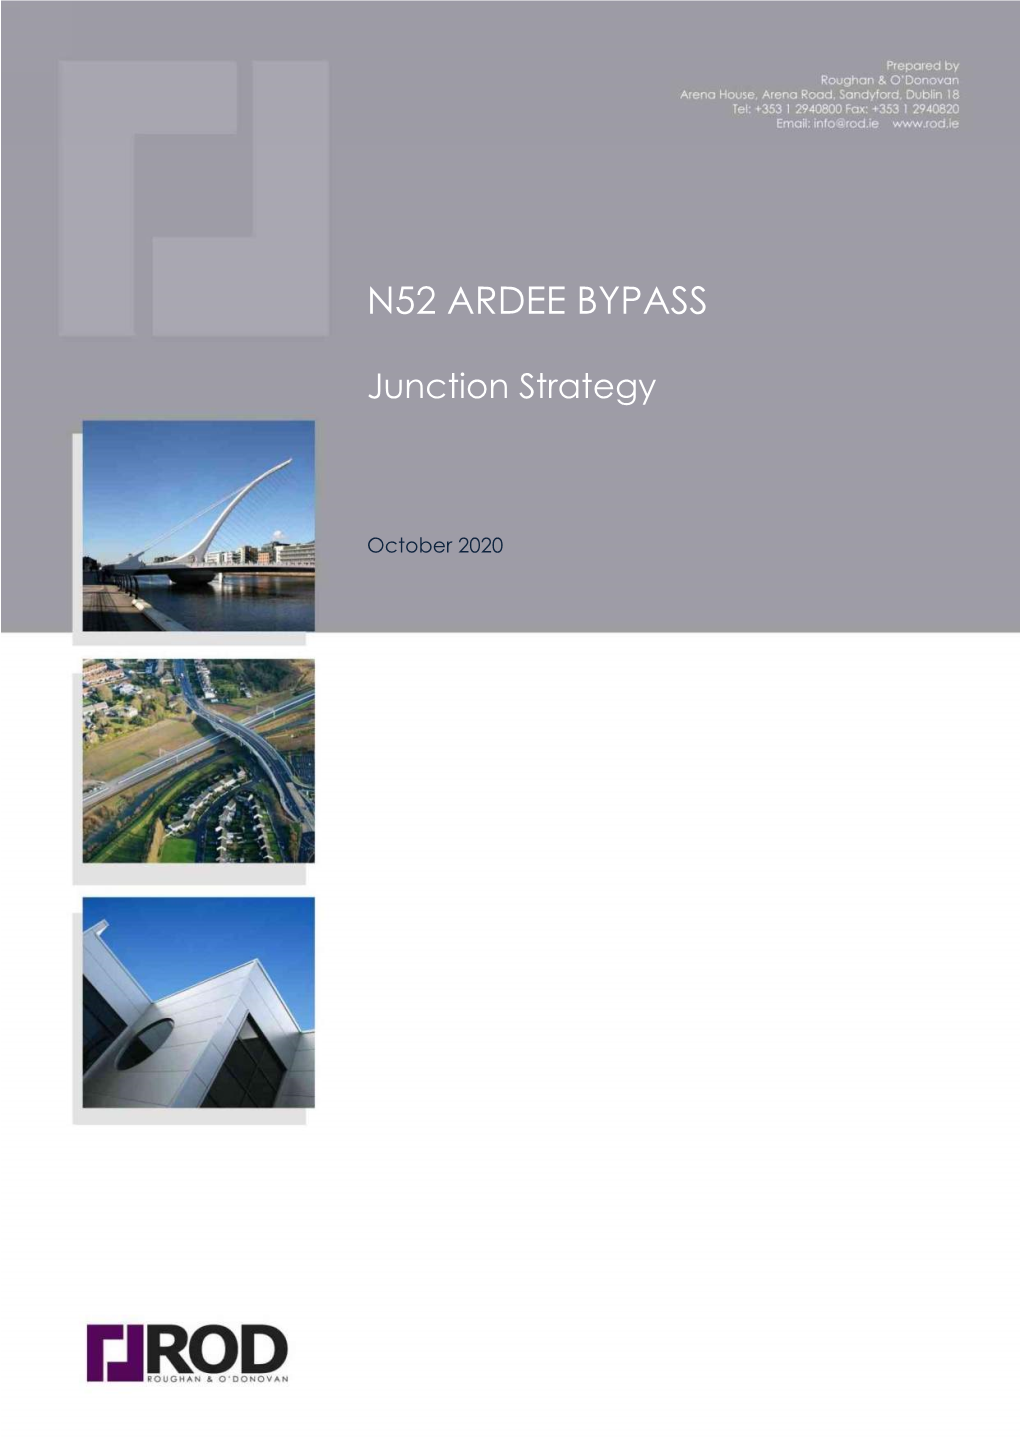 N52 Ardee Bypass